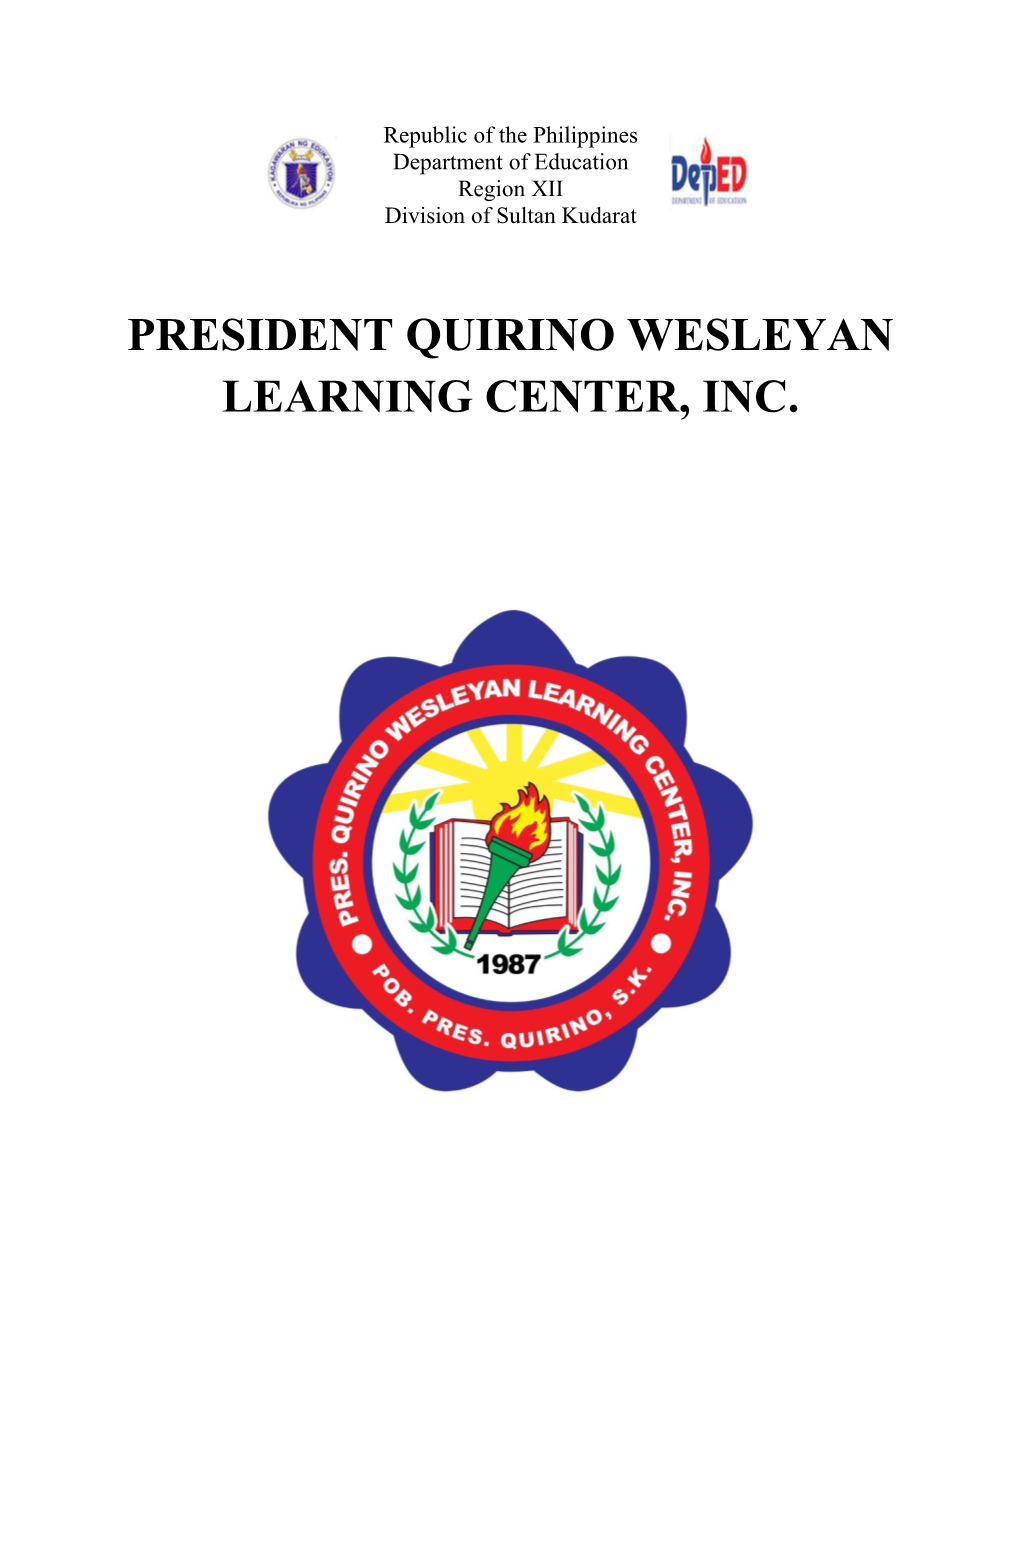 President Quirino Wesleyan Learning Center, Inc